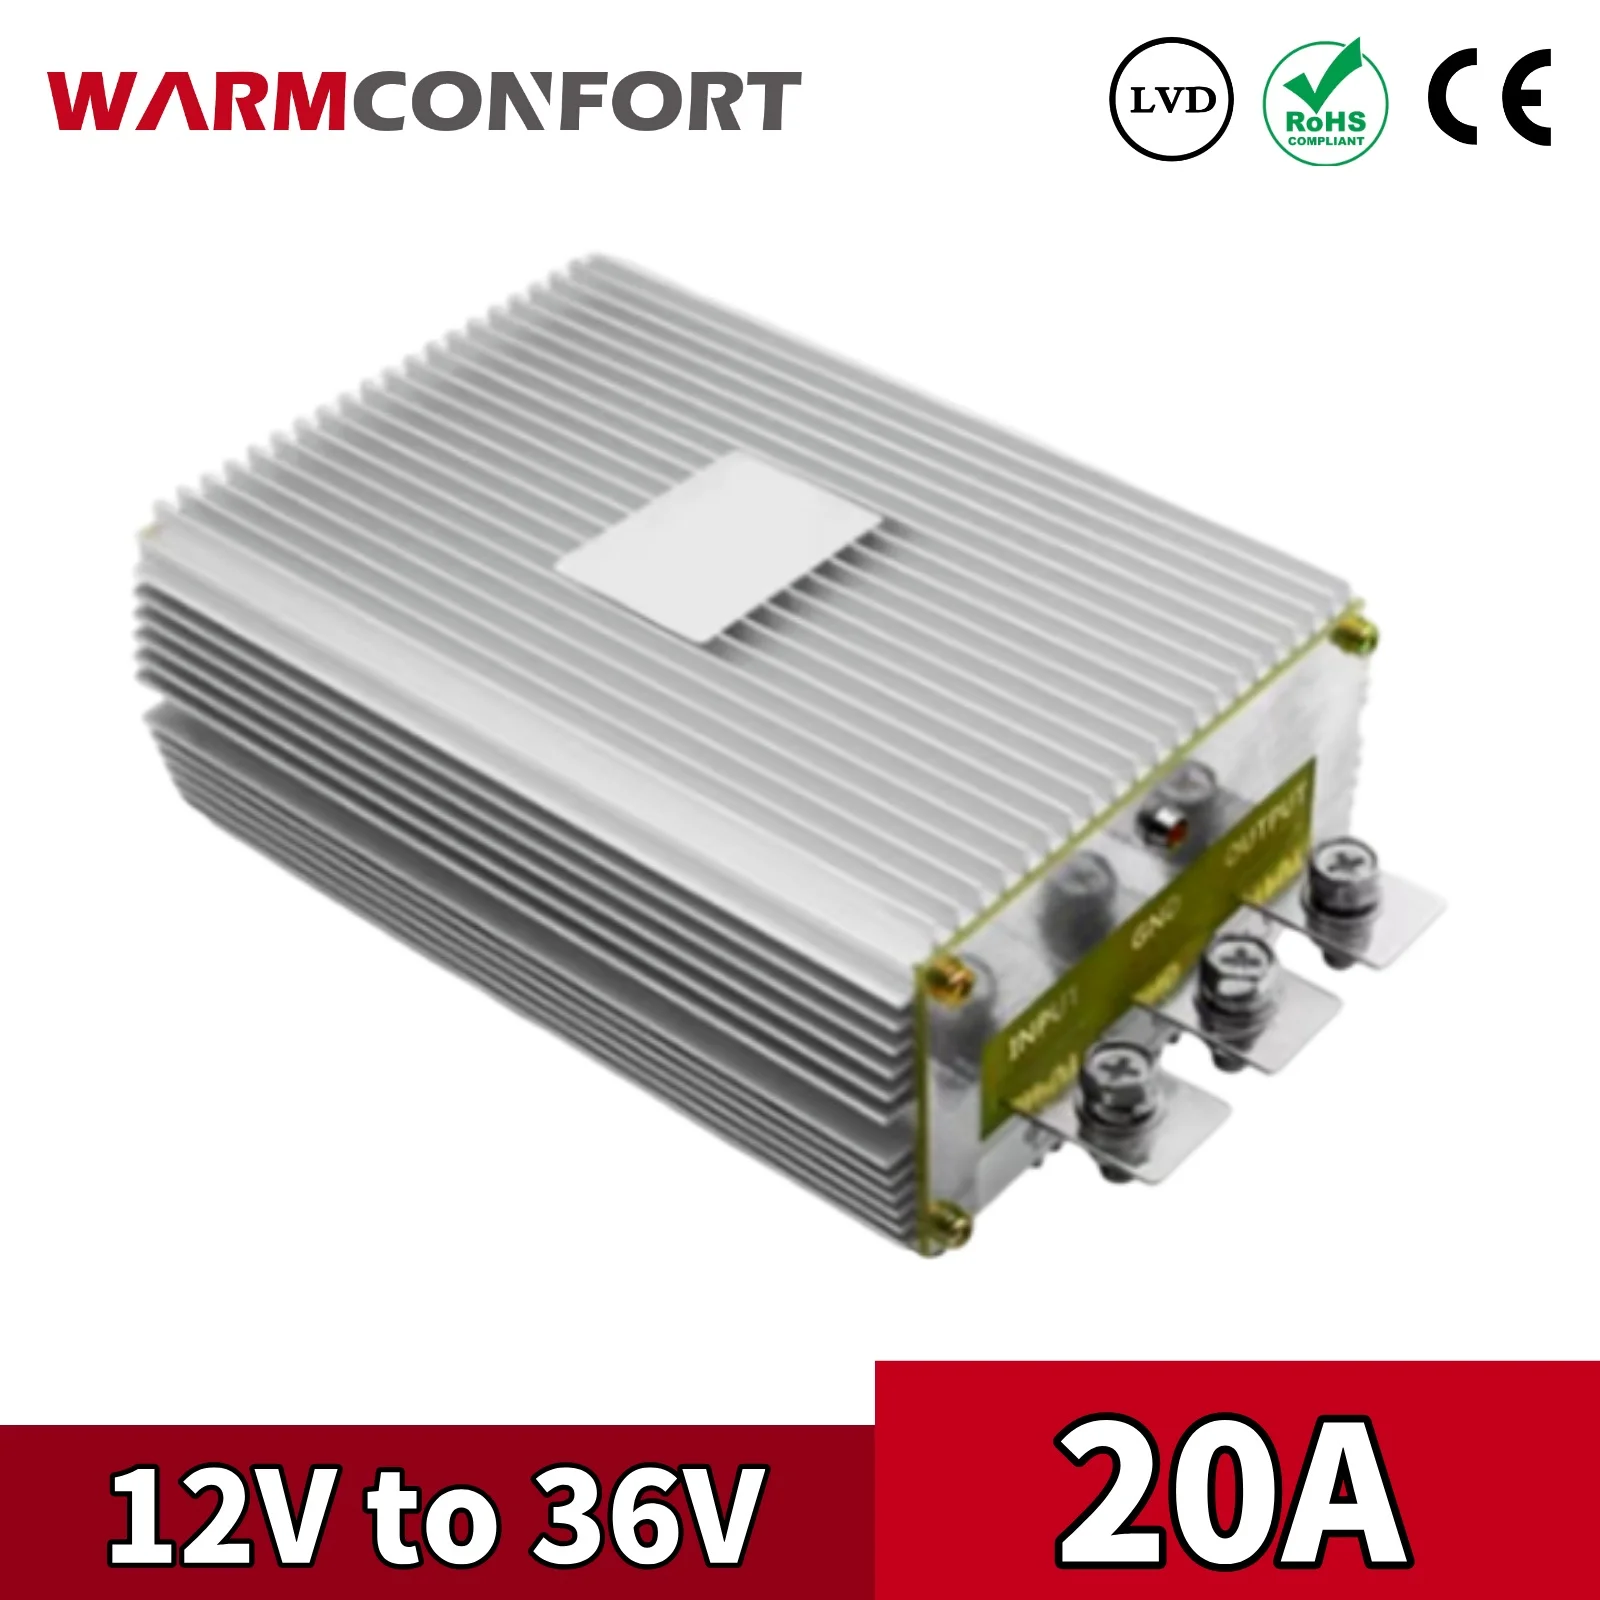 

Warmconfort 12V to 36V 20A 720W DC-DC Step-up Power Converter Regulator 288W Car Laptop Power Supply CE RoHS